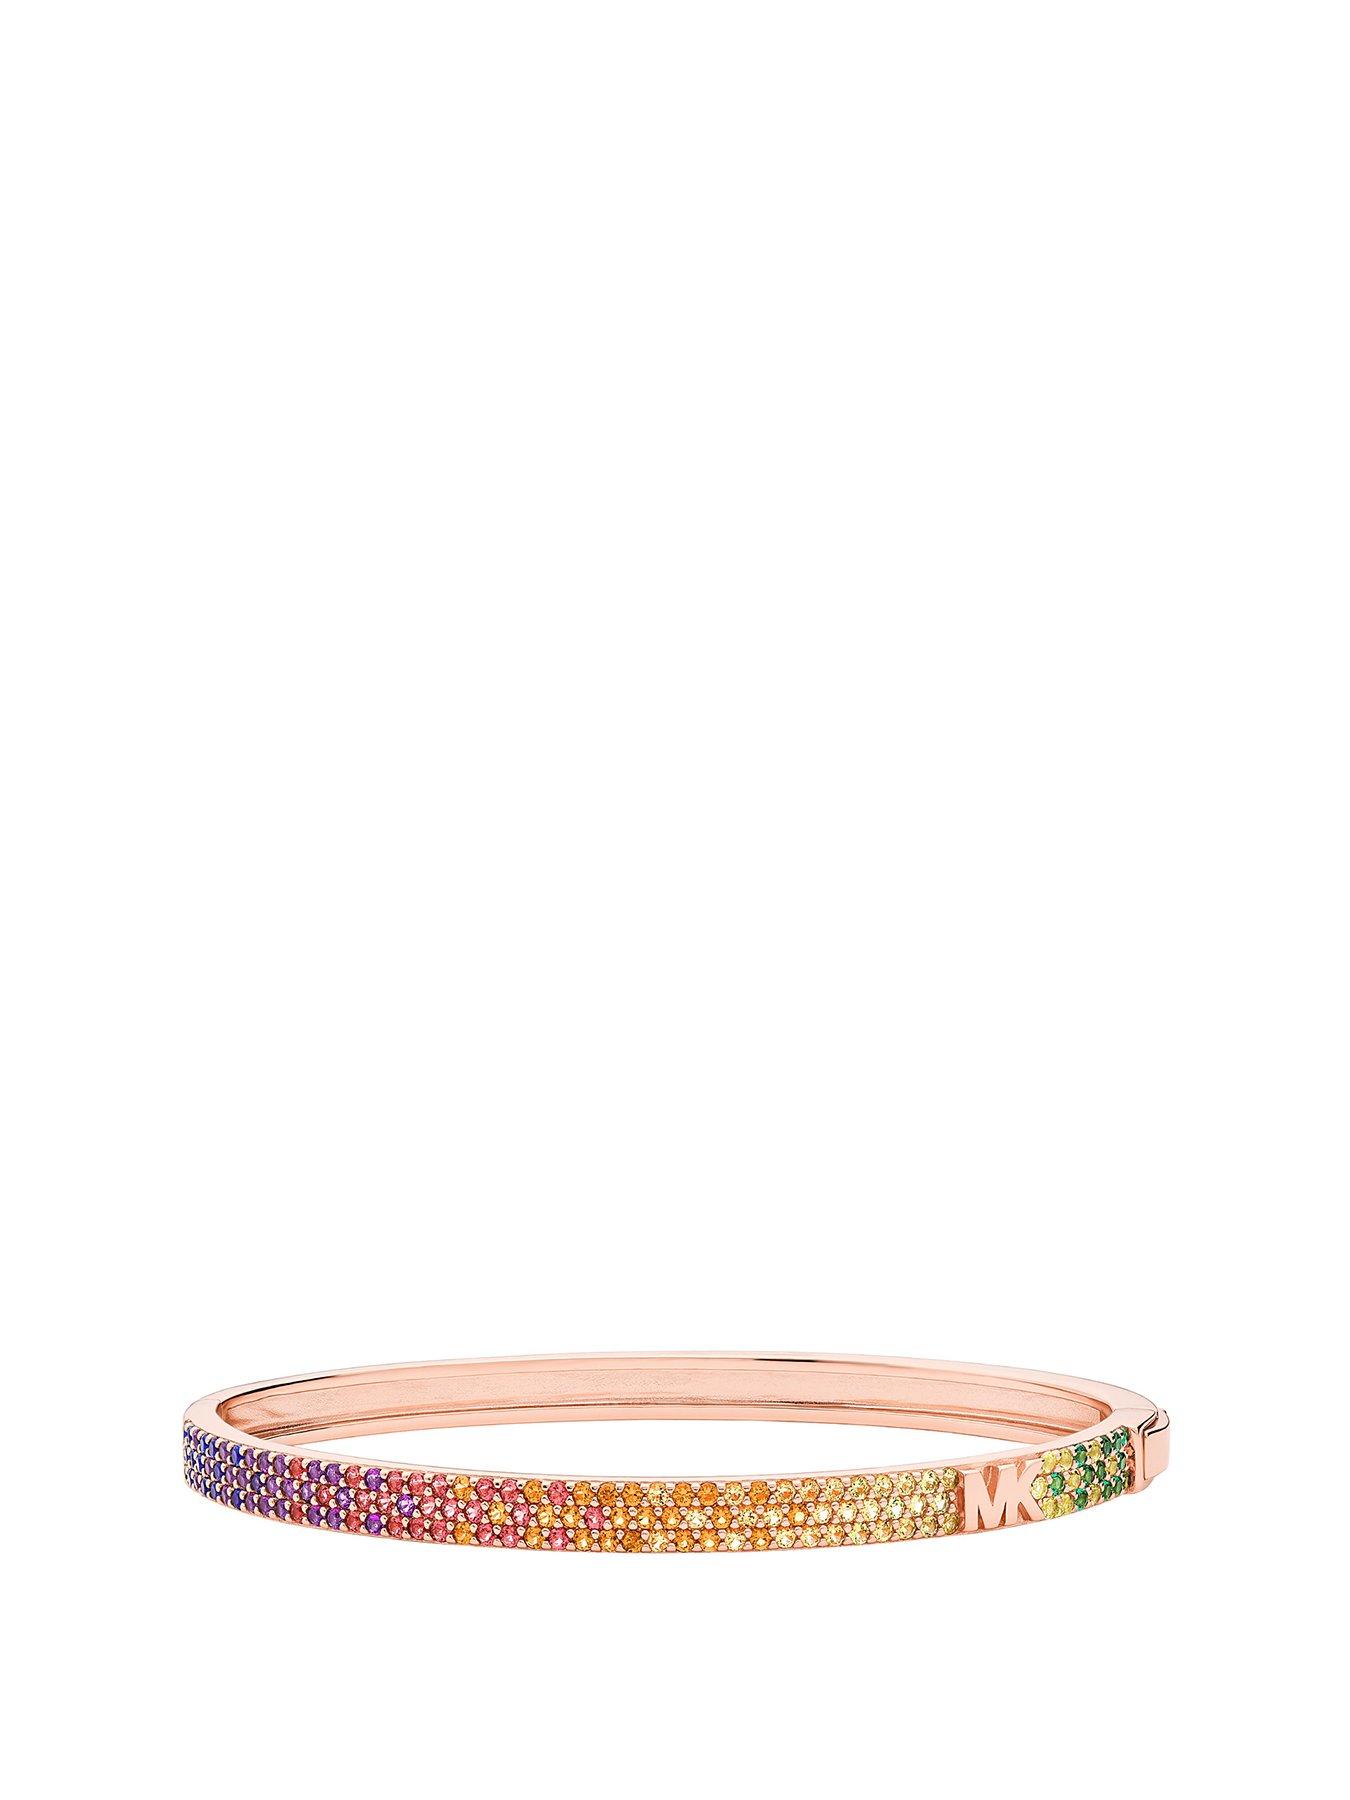 Bracelets | Michael kors | Jewellery | Designer brands 